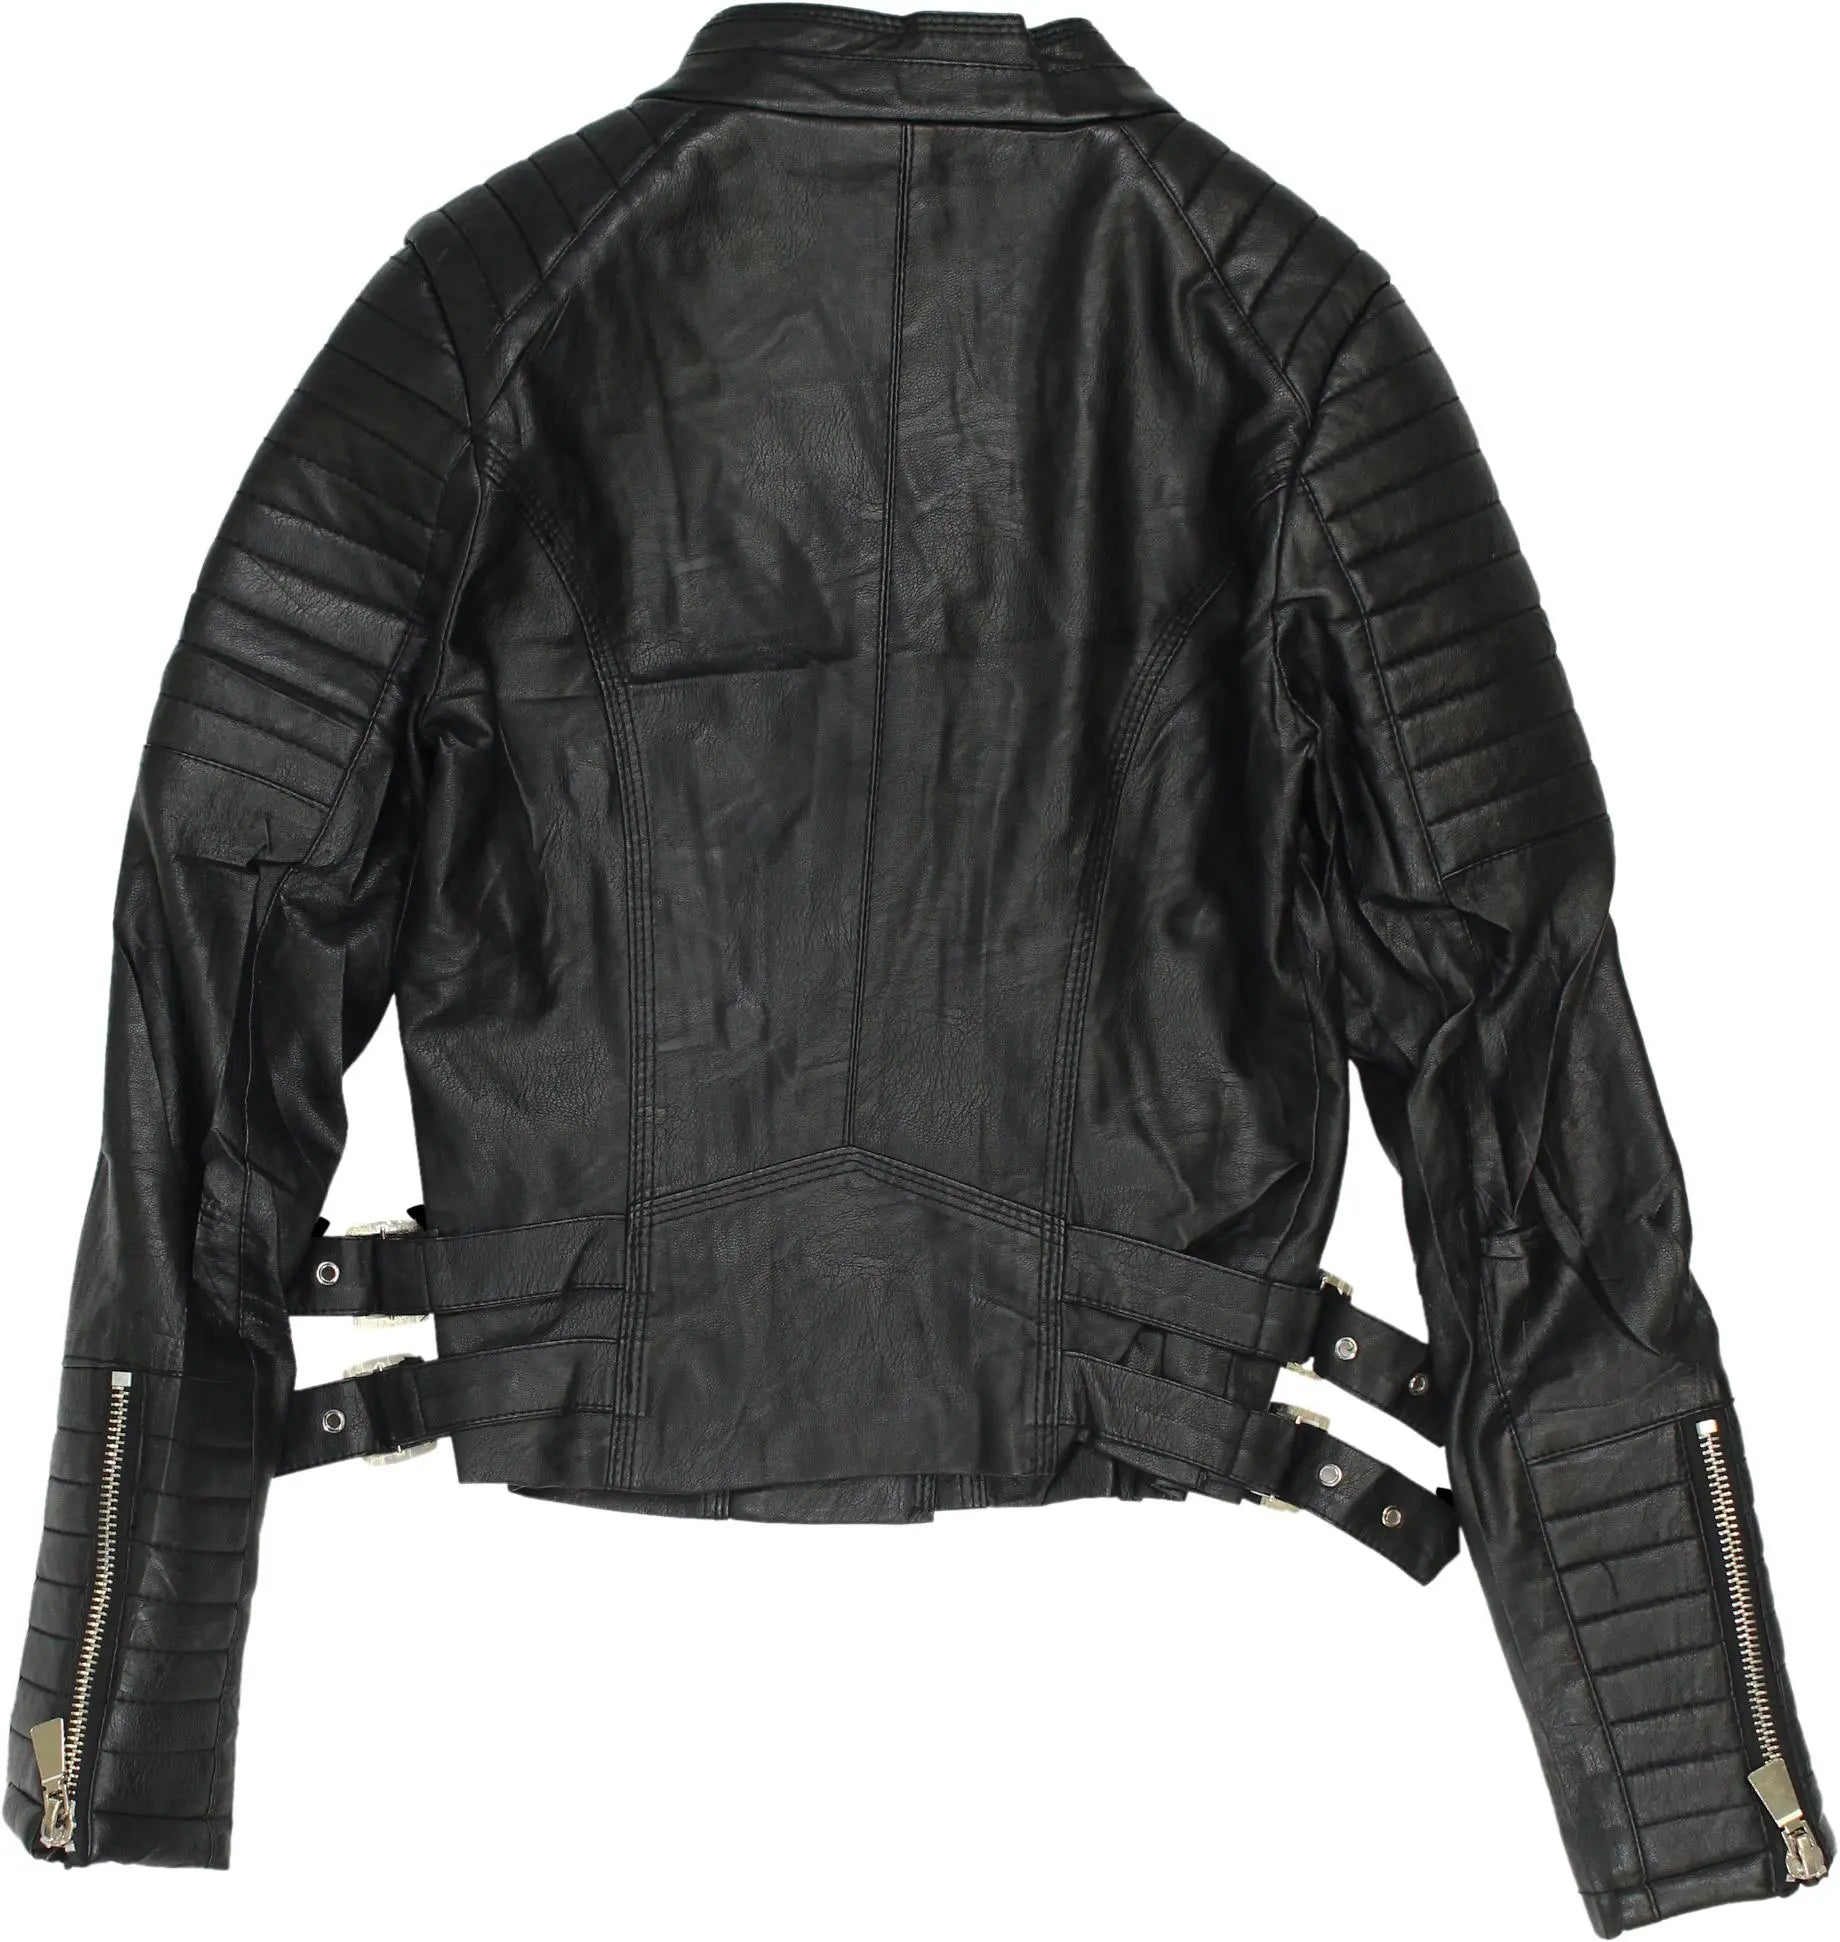 Voyelles - Leather Biker Jacket- ThriftTale.com - Vintage and second handclothing